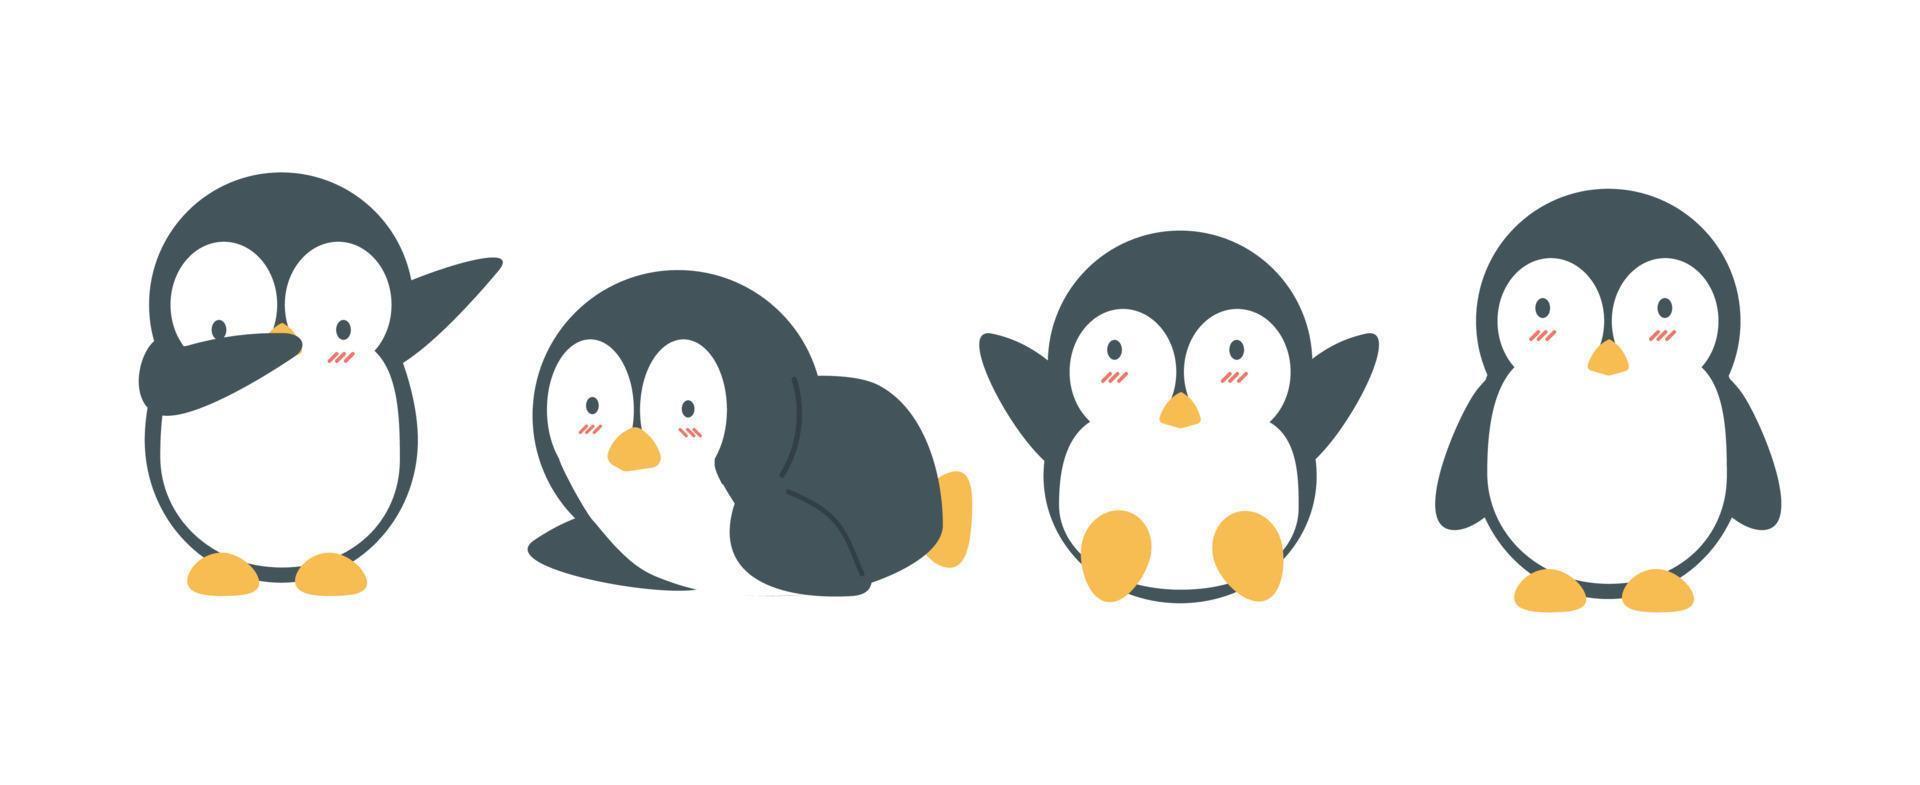 colección de garabatos de pingüinos de dibujos animados vector